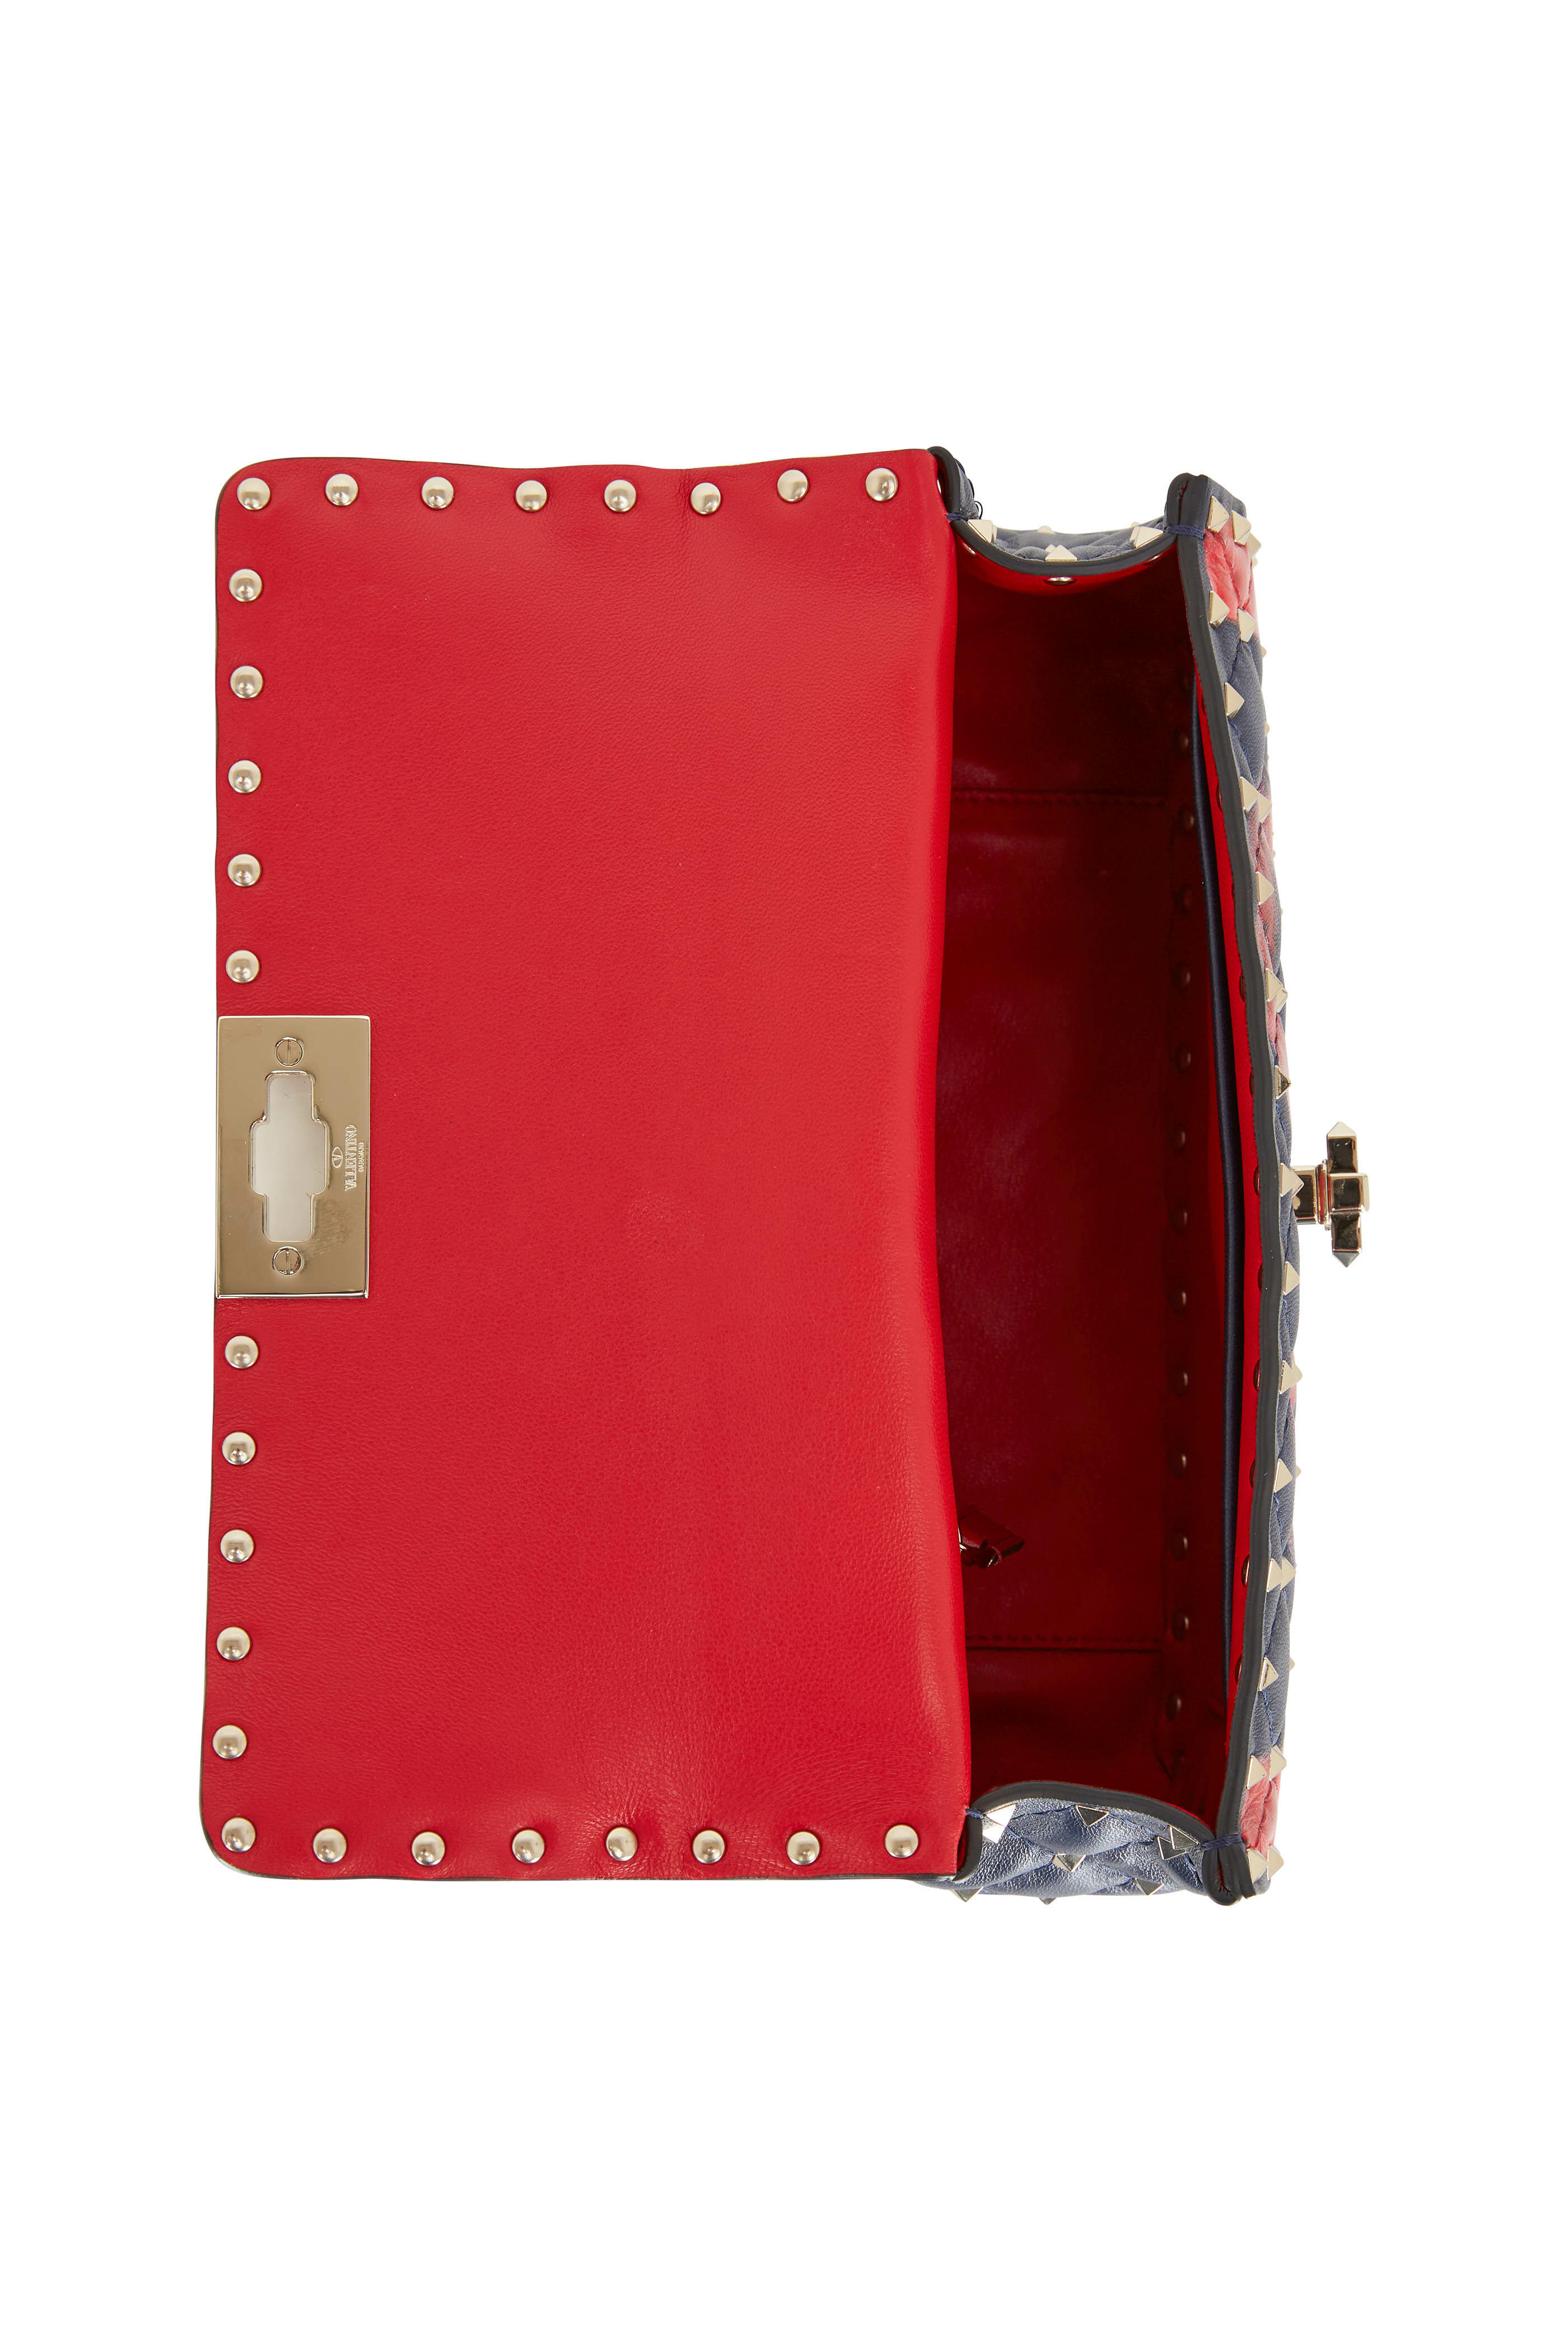 Valentino Garavani Rockstud Calfksin Small Shoulder Bag In Red